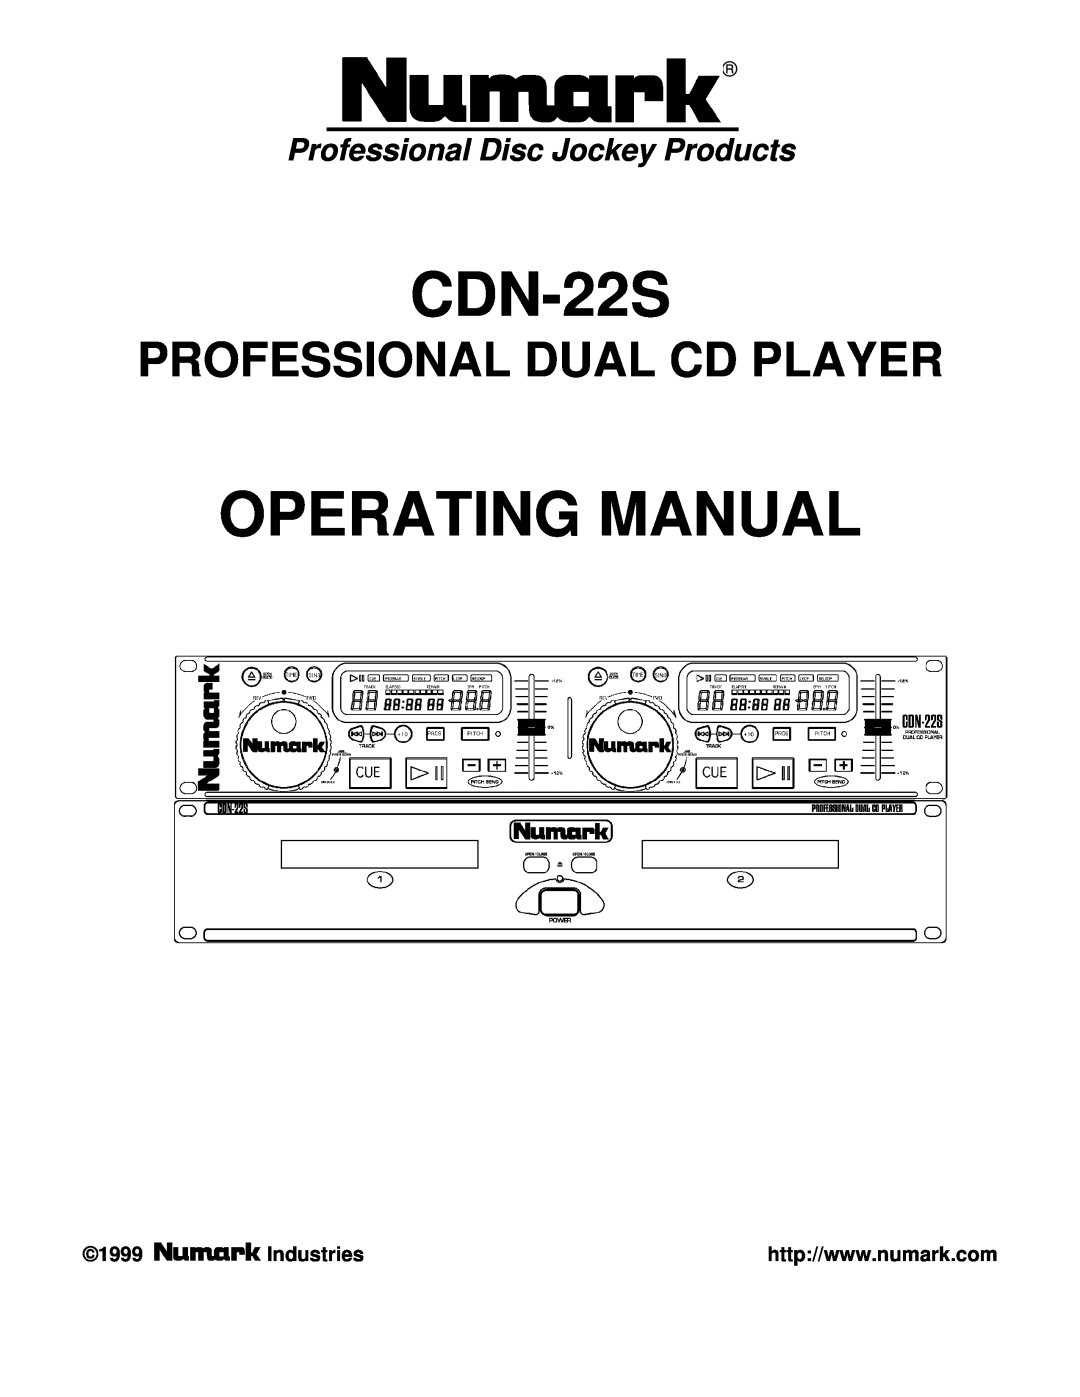 Numark Industries CDN-22S manual Professional Disc Jockey Products, Operating Manual, Professional Dual Cd Player 